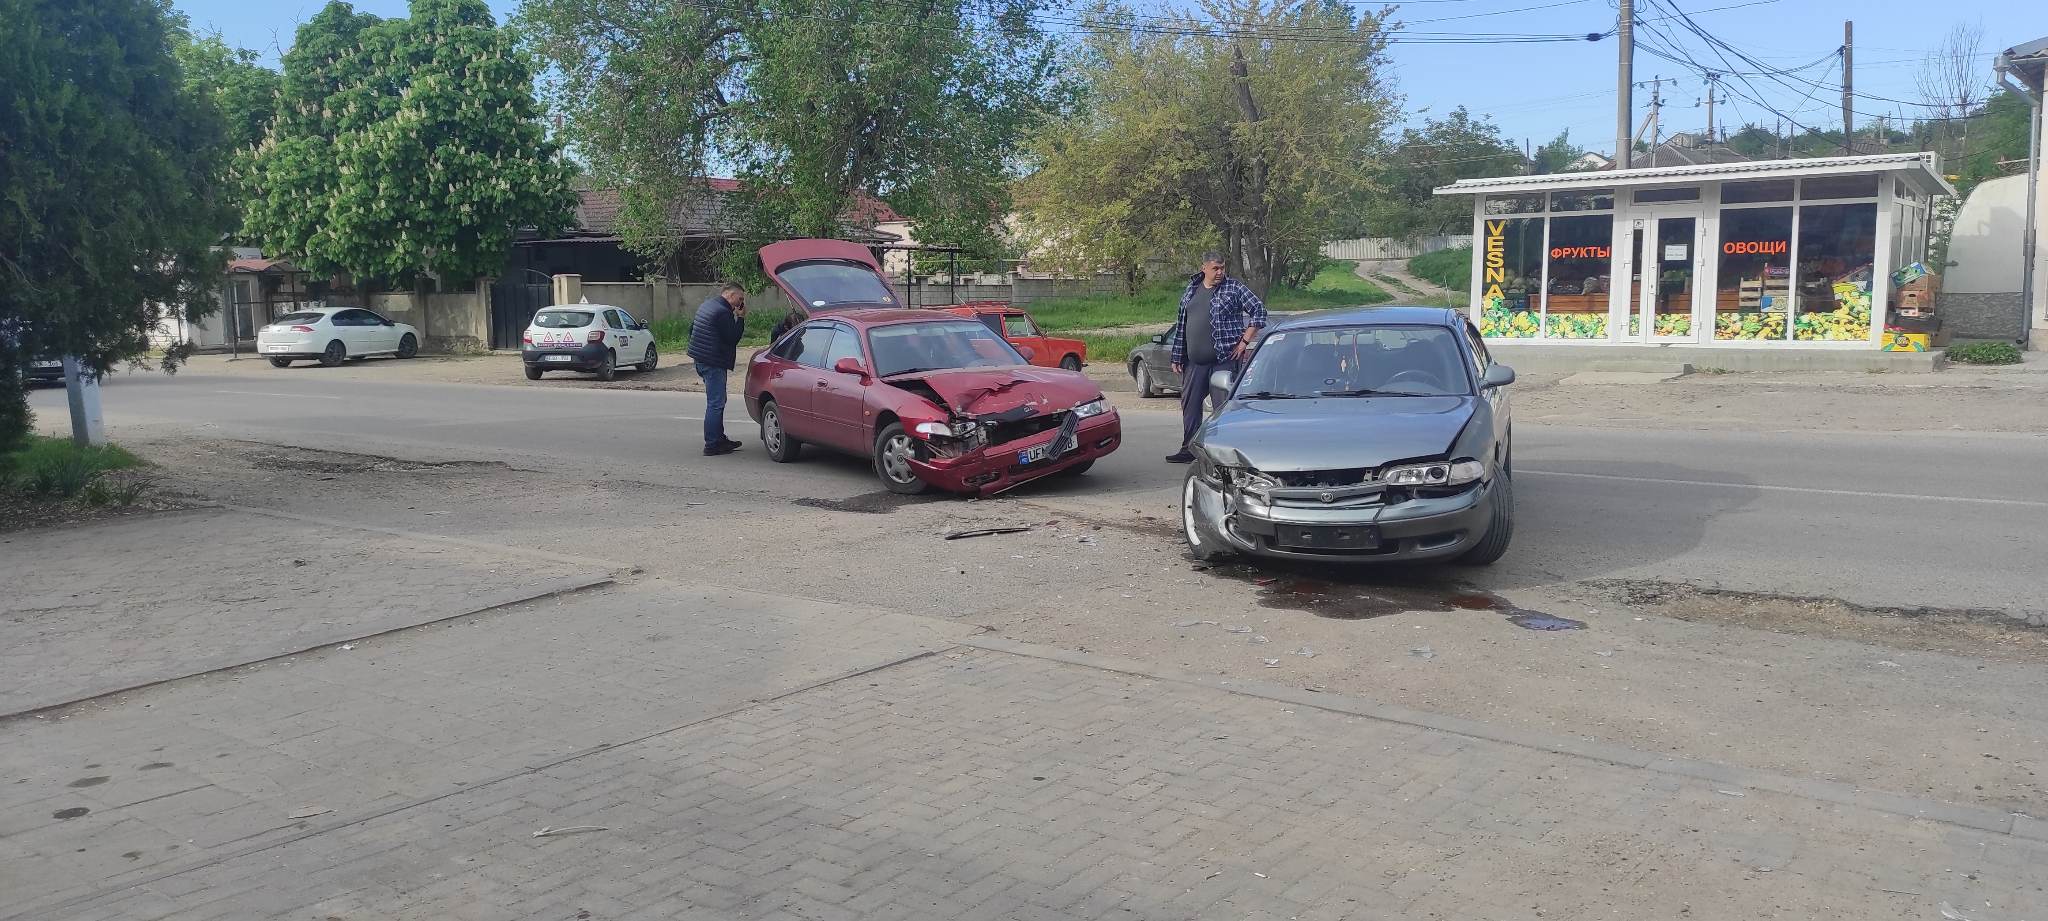 В центре Басарабяски столкнулись 2 автомобиля